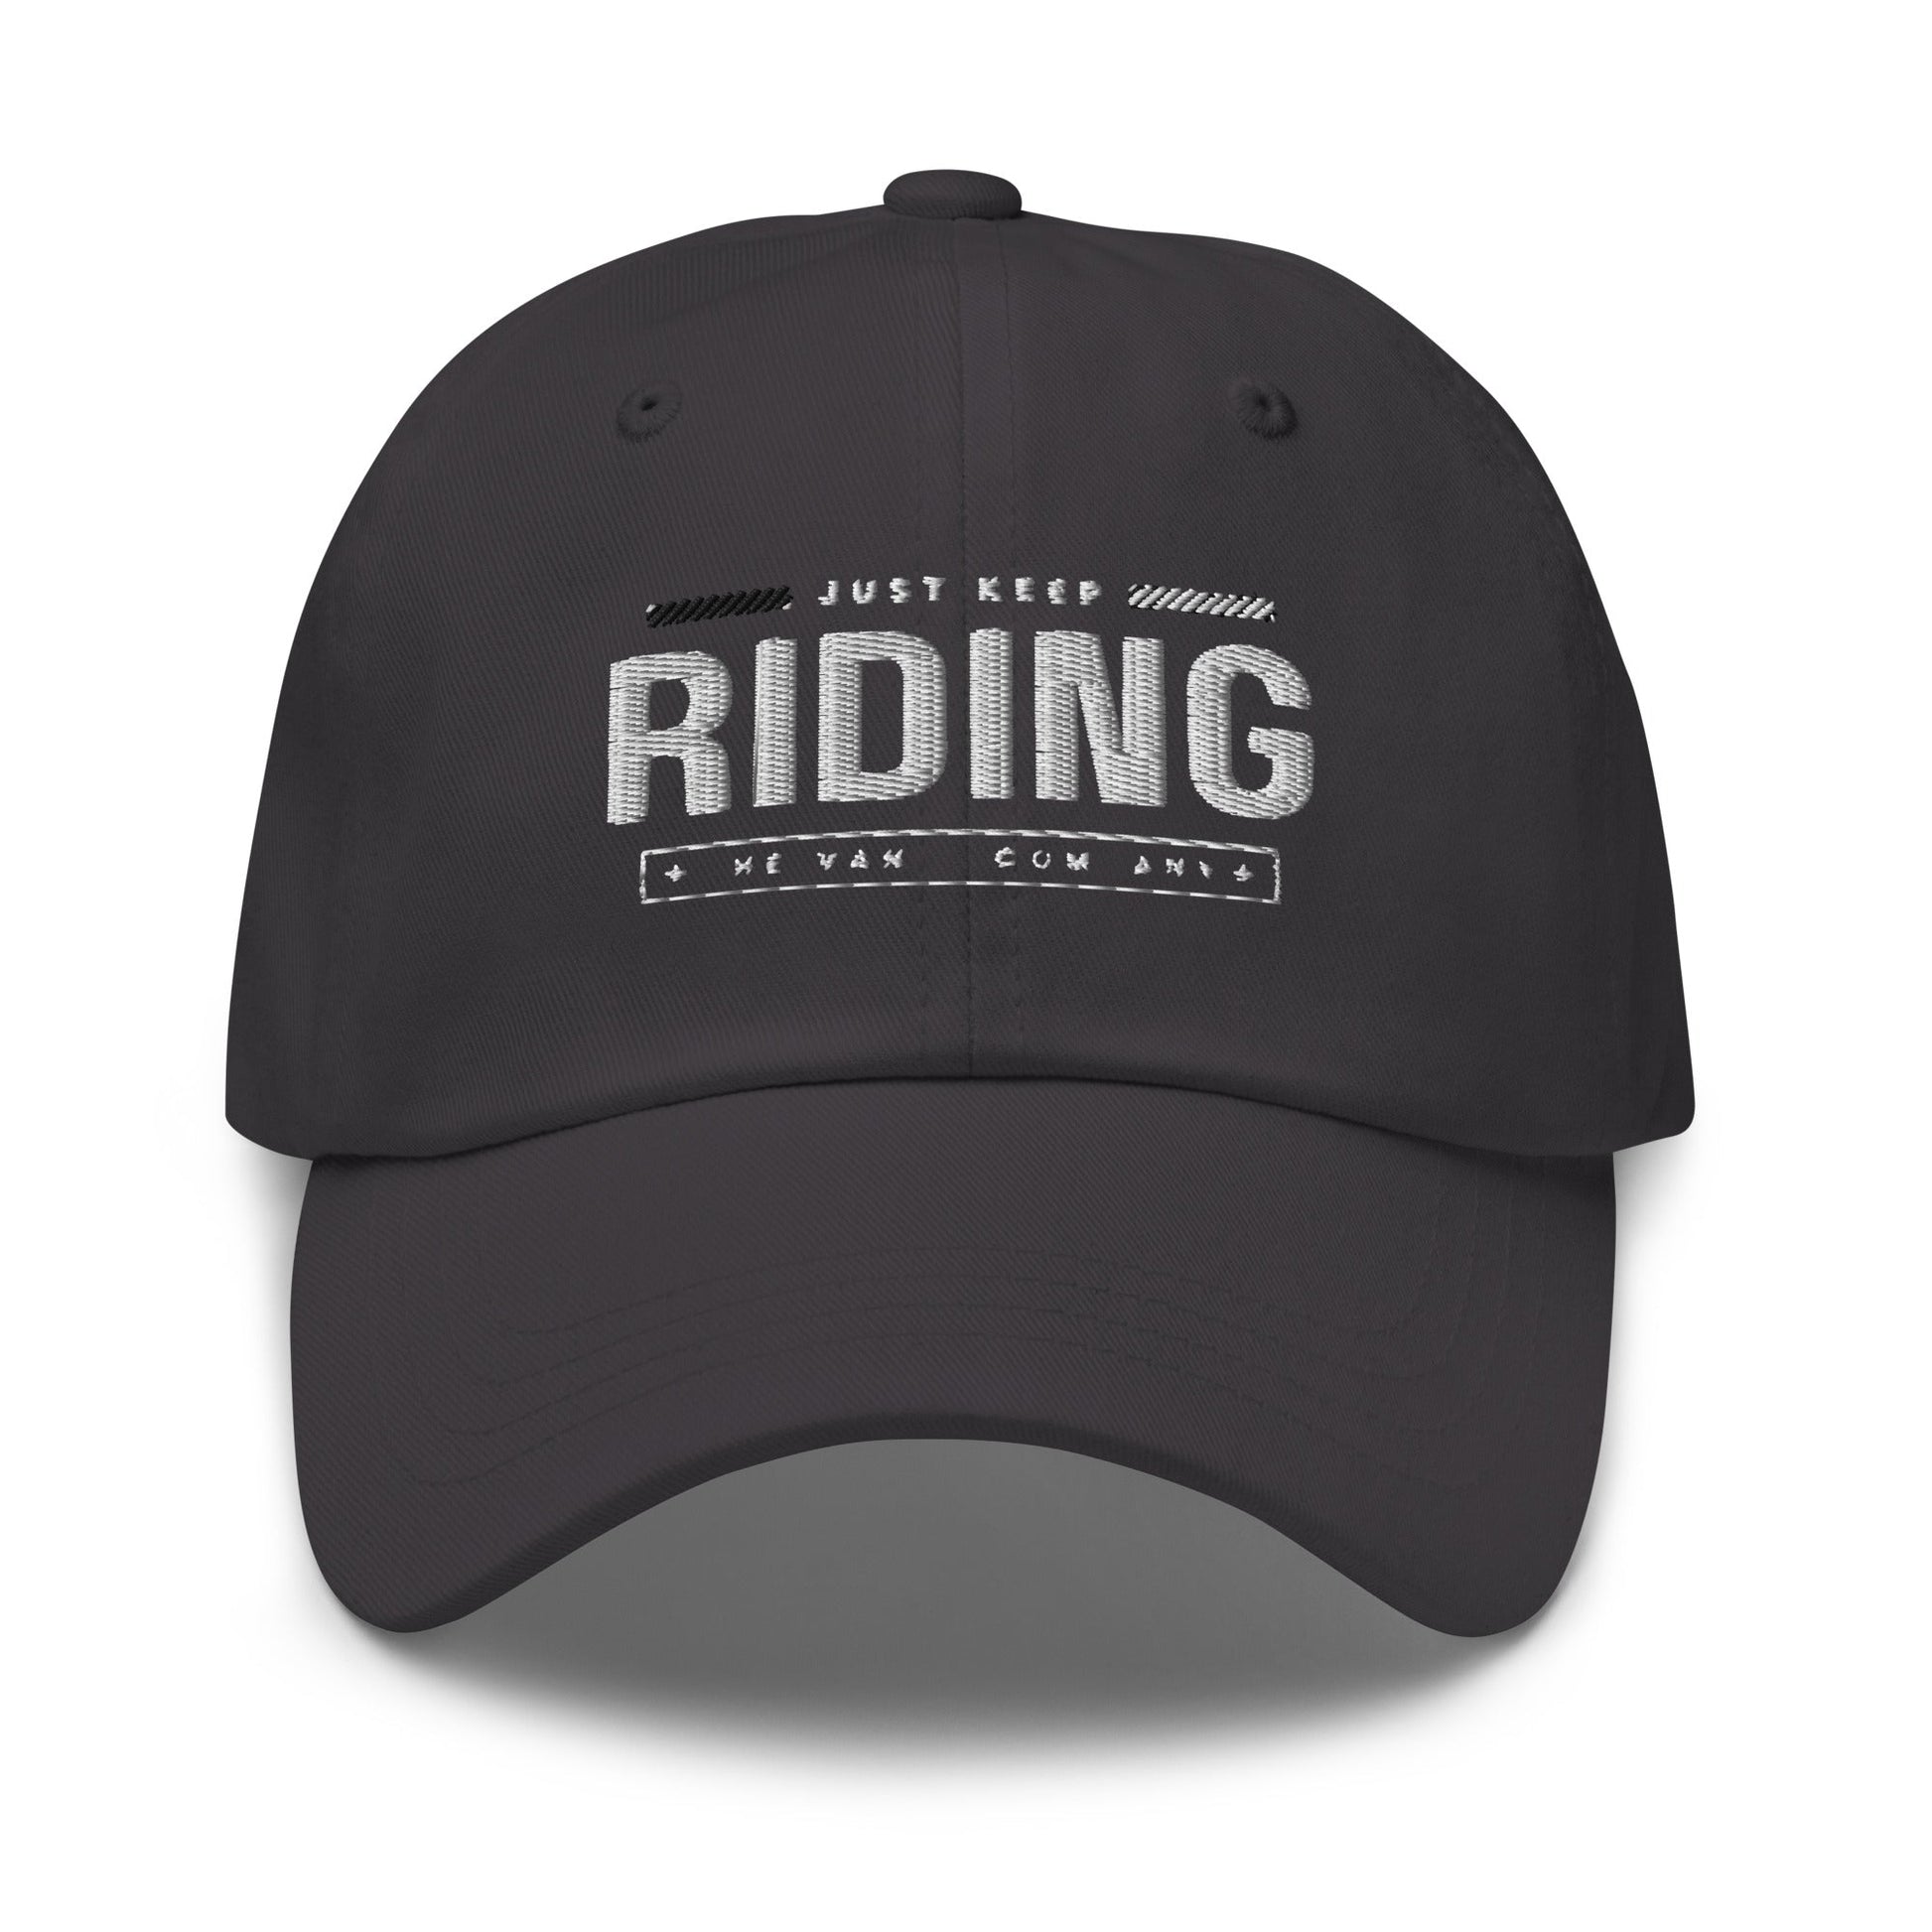 Hat - Riding - The Vandi Company